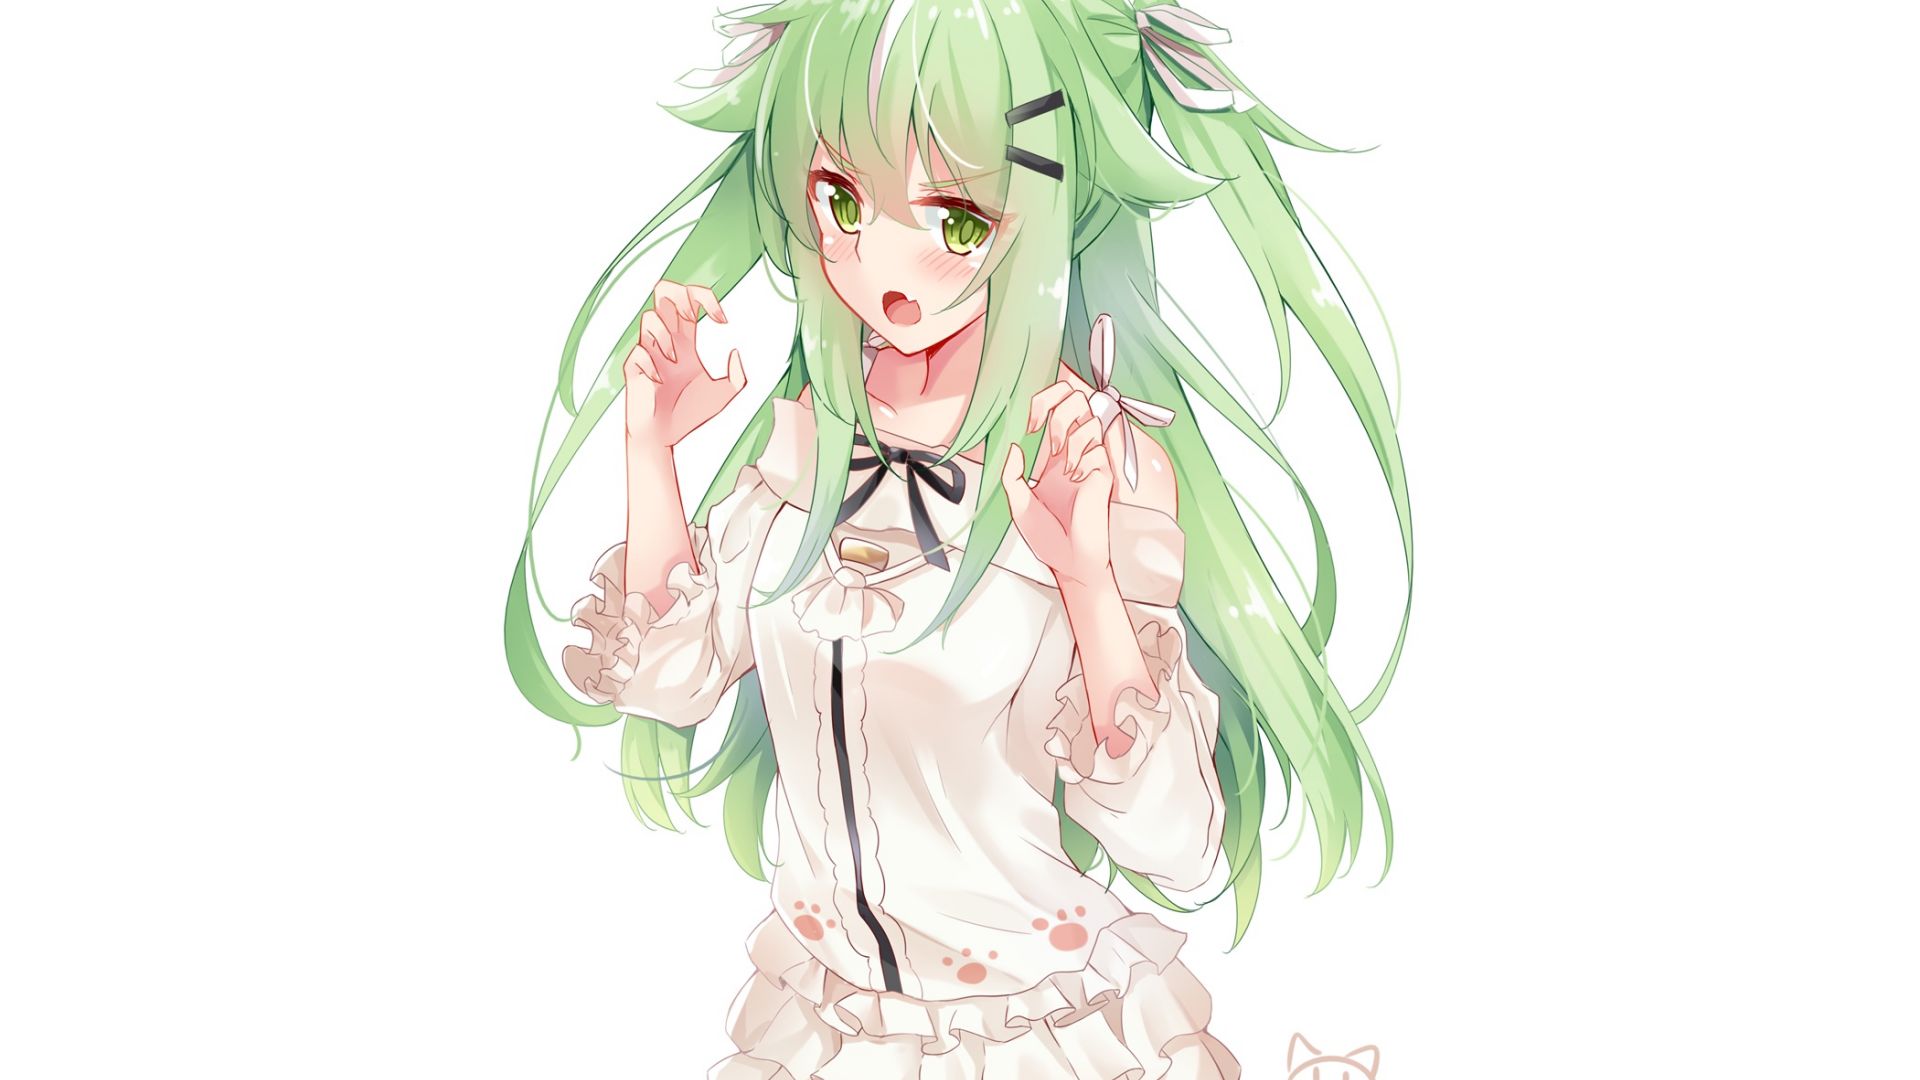 Wallpaper Cute, green hair anime girl, original, minimal